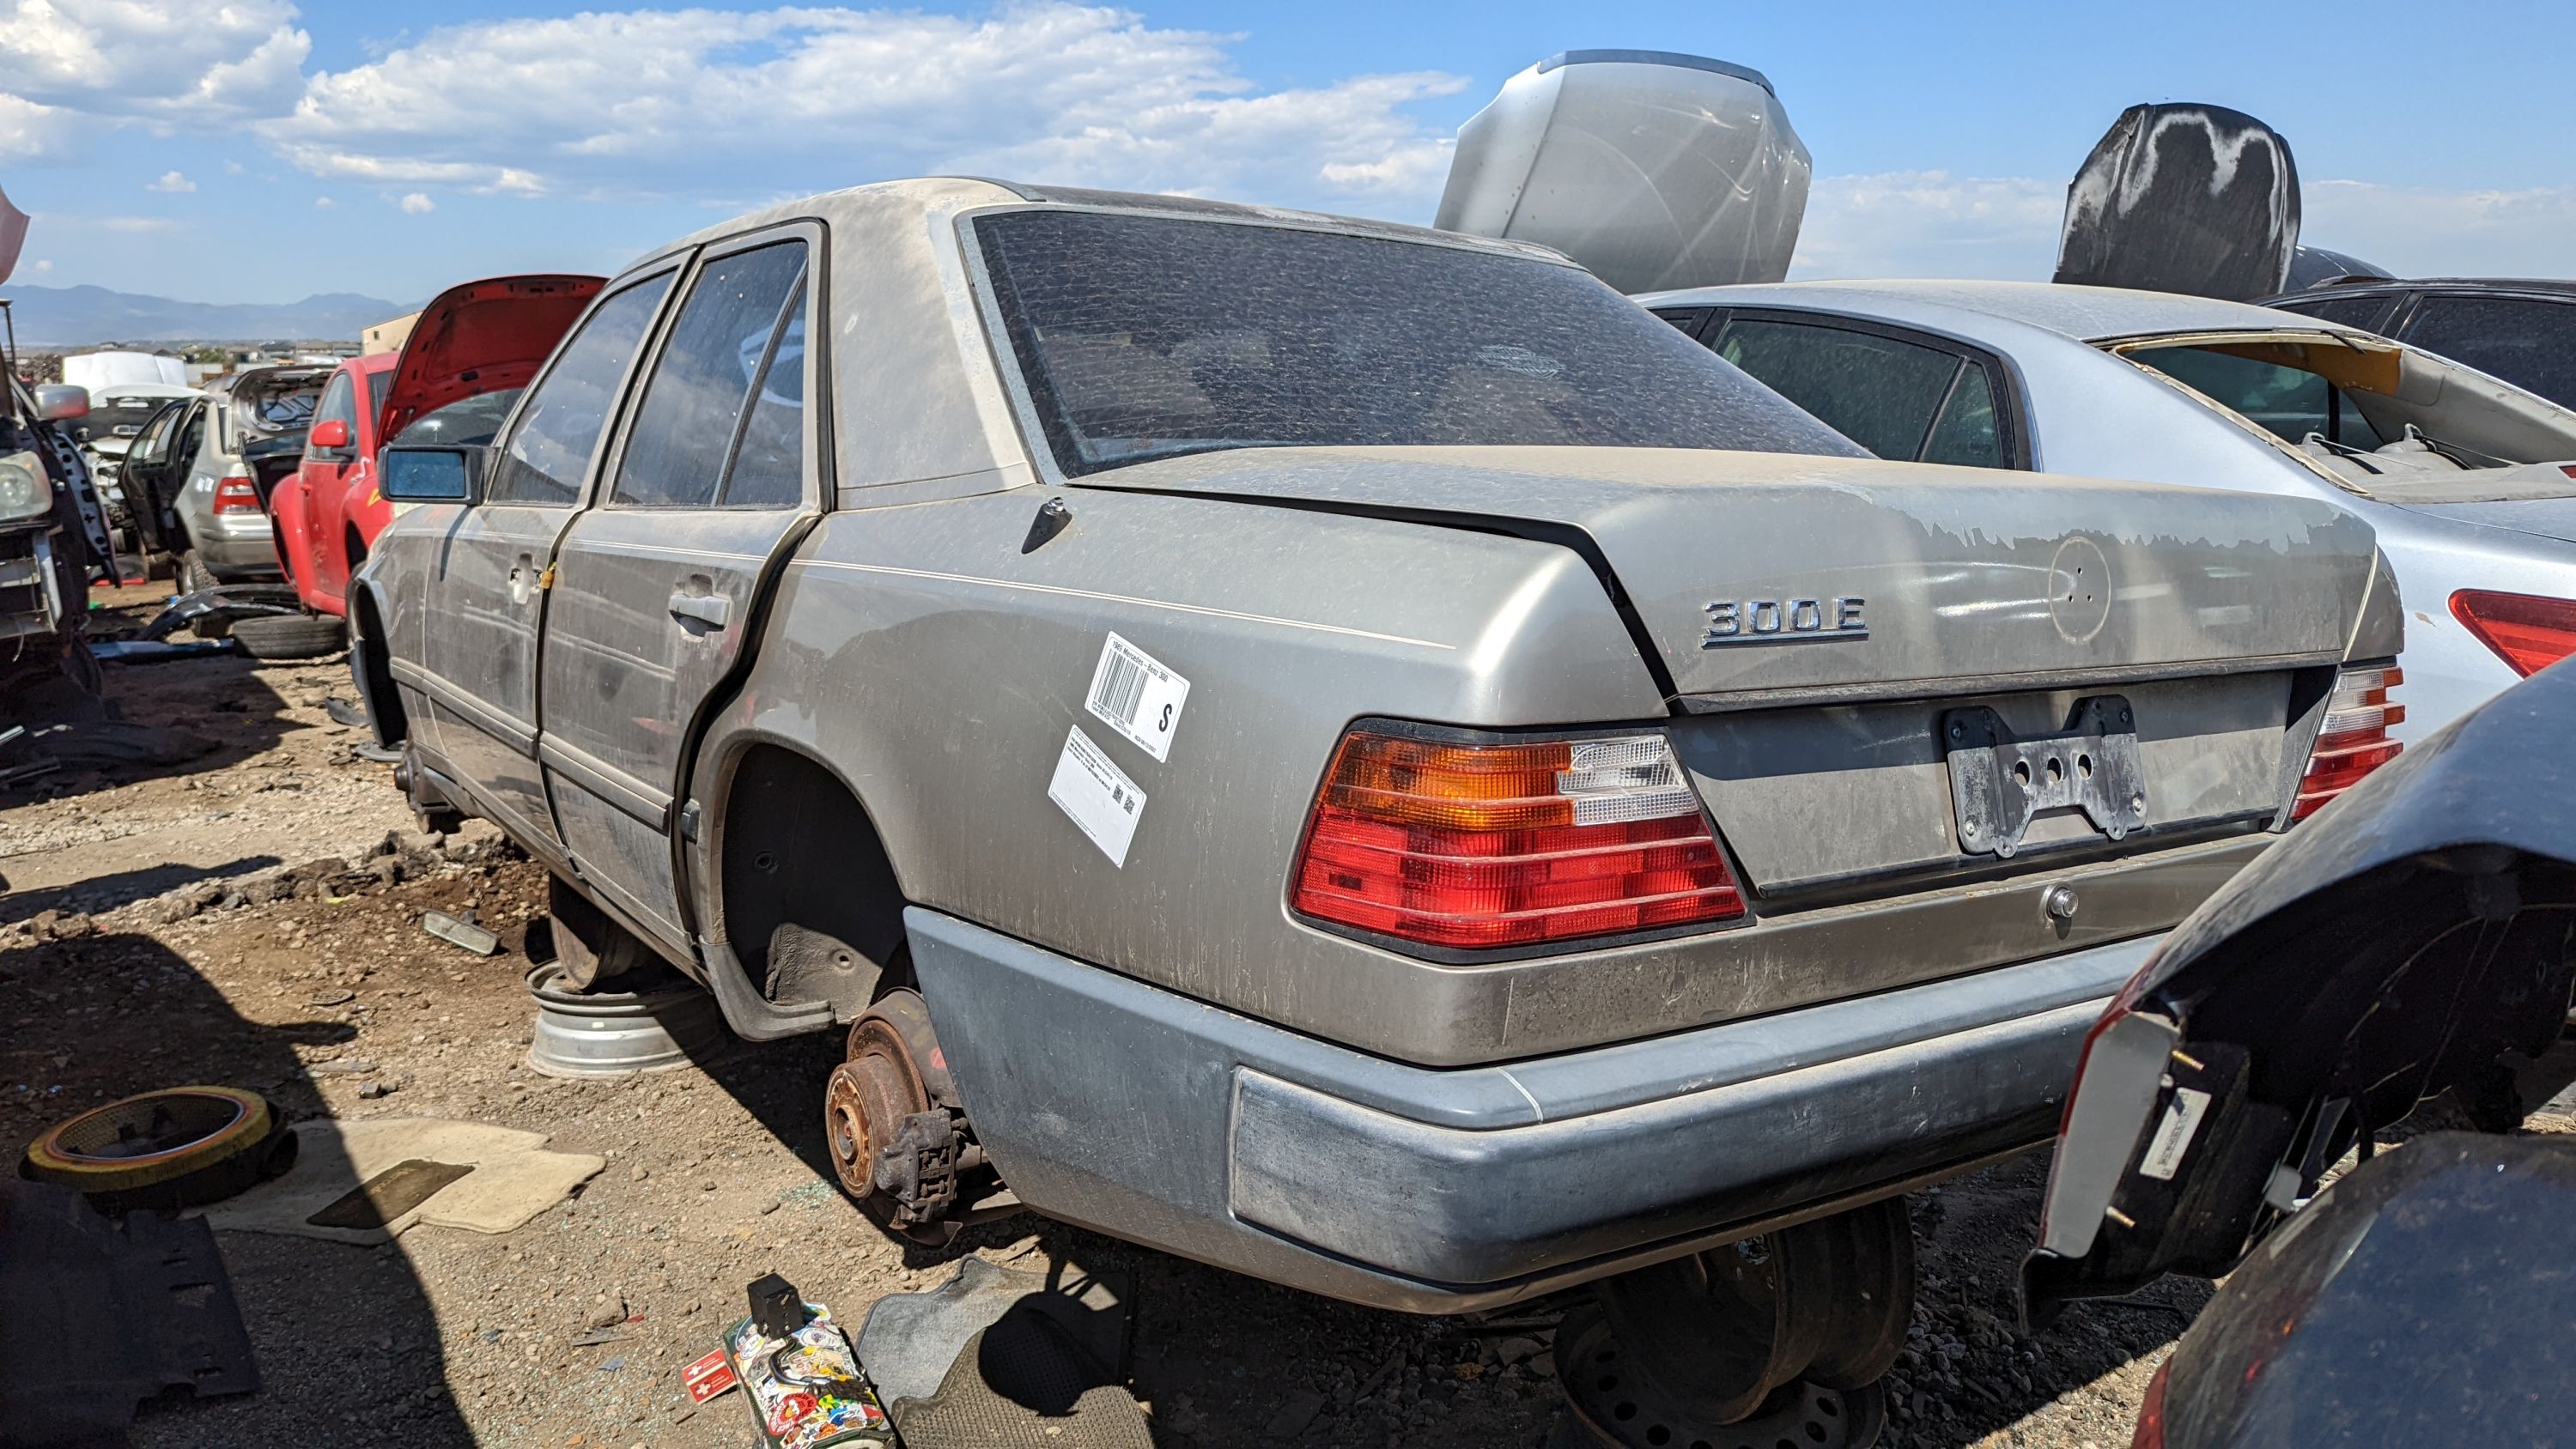 30 - 1989 Mercedes-Benz 300E W124 in Colorado junkyard - photo by Murilee Martin